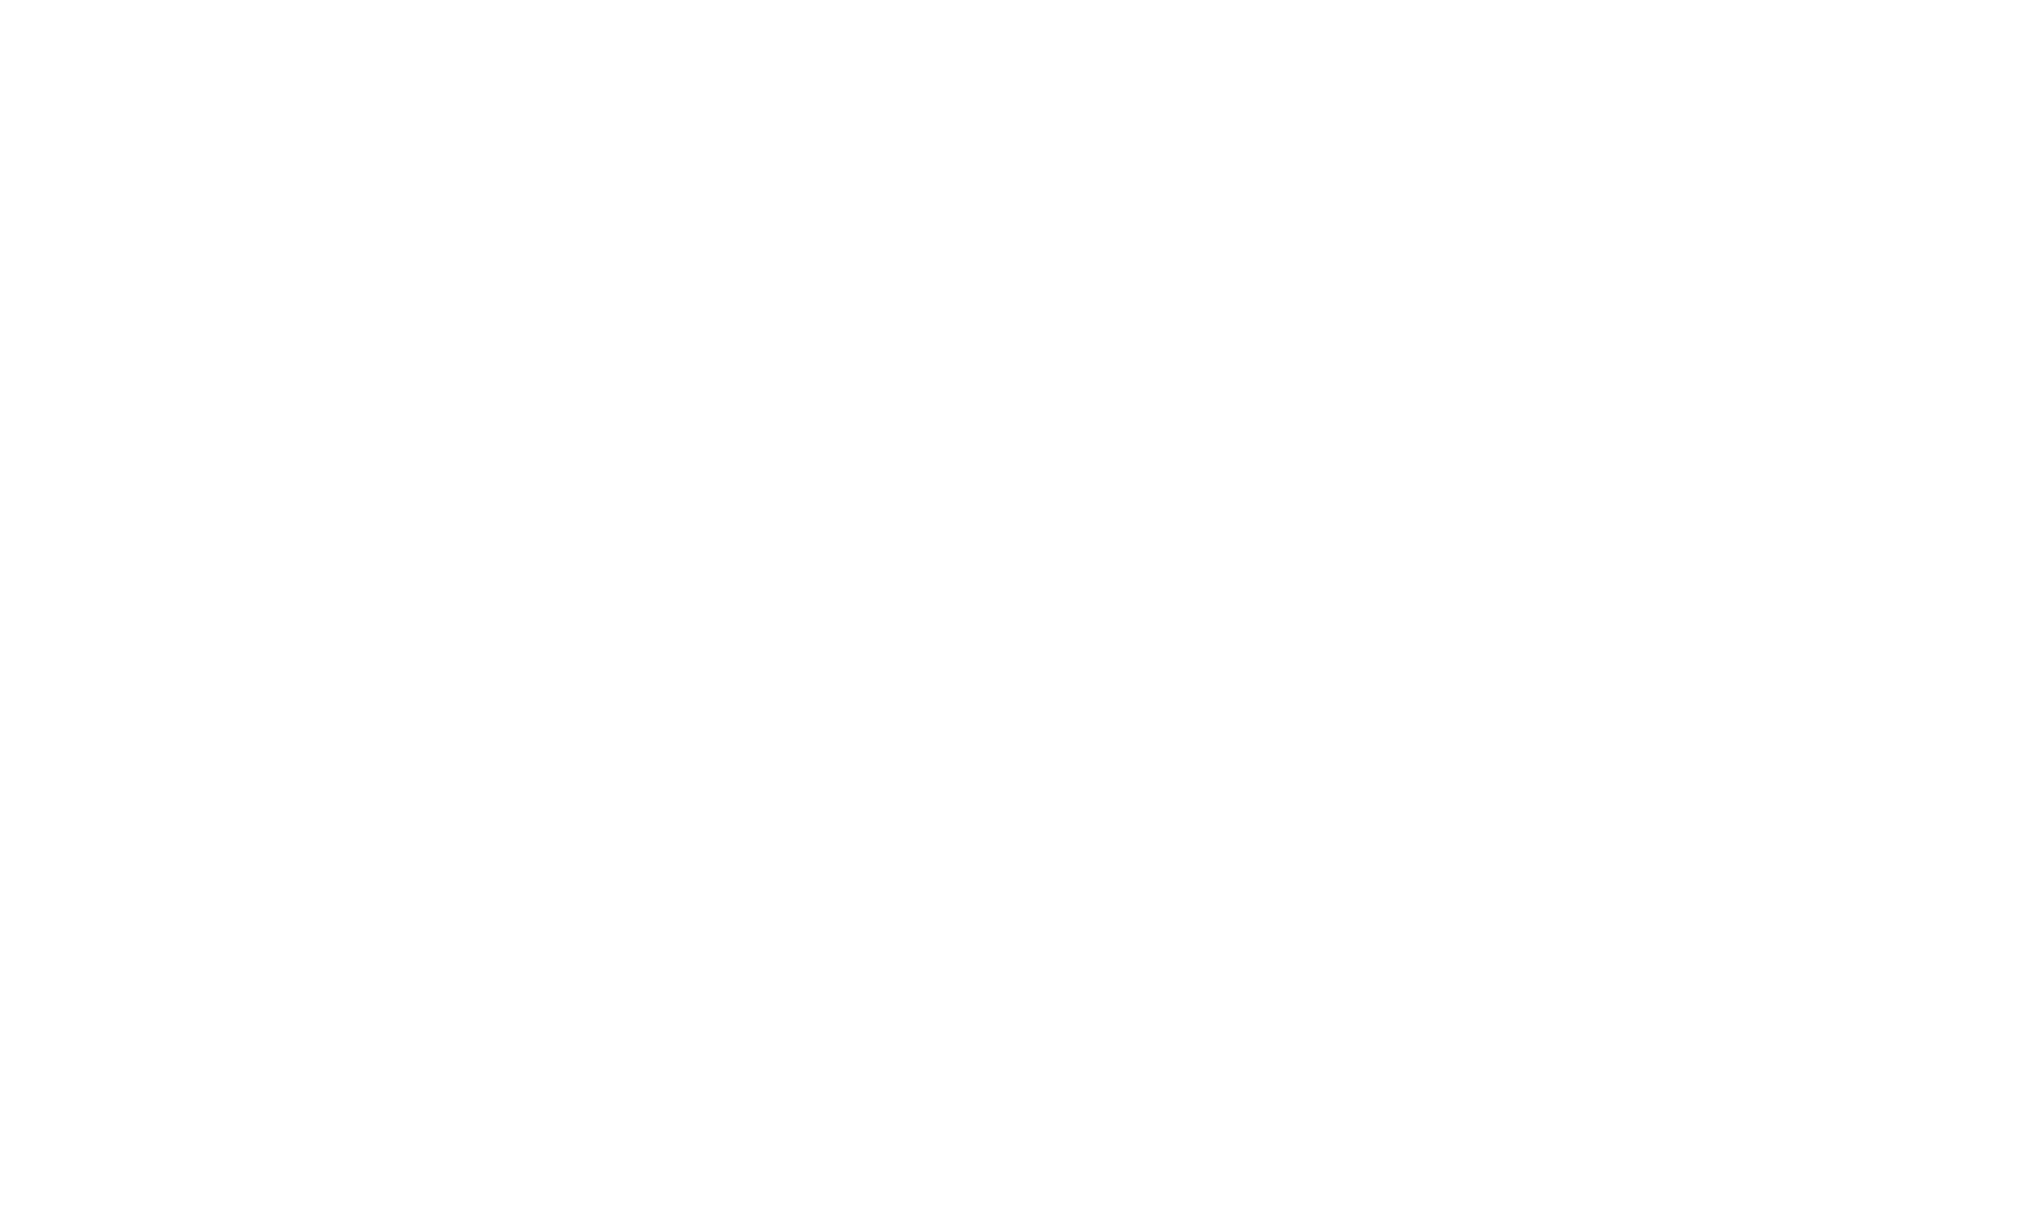 HVAC Icon